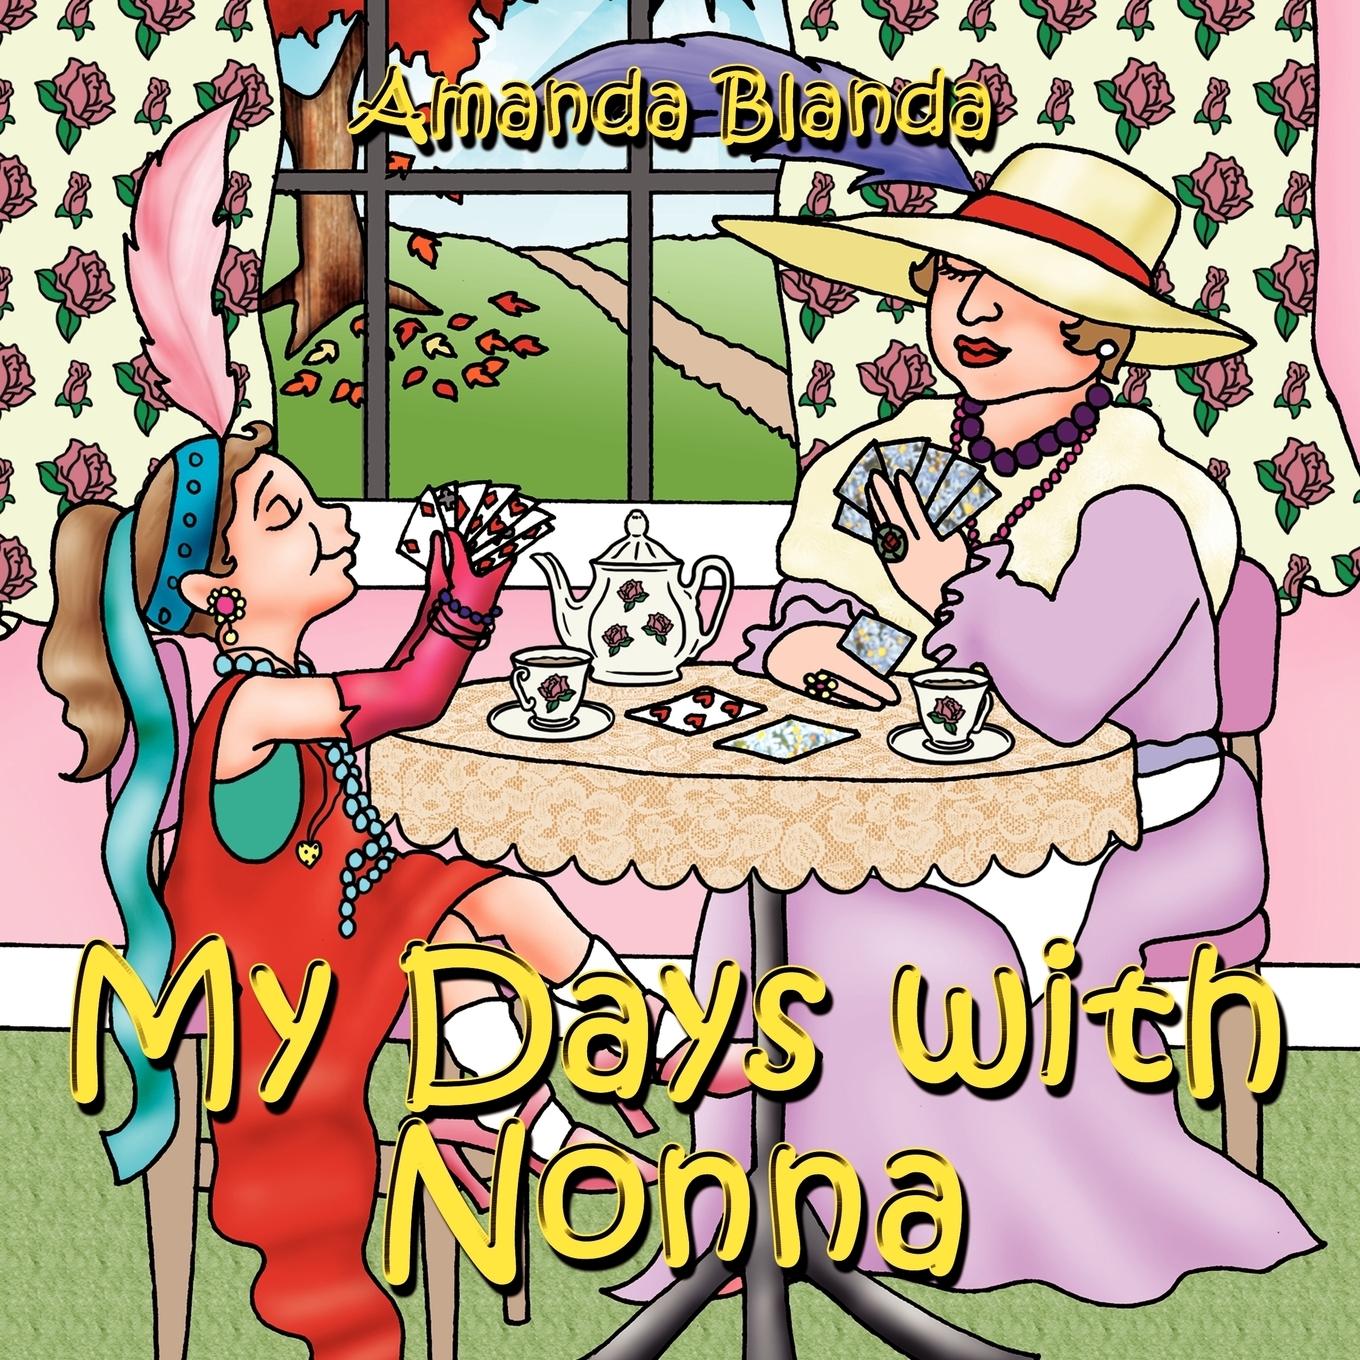 My Days with Nonna - Blanda, Amanda